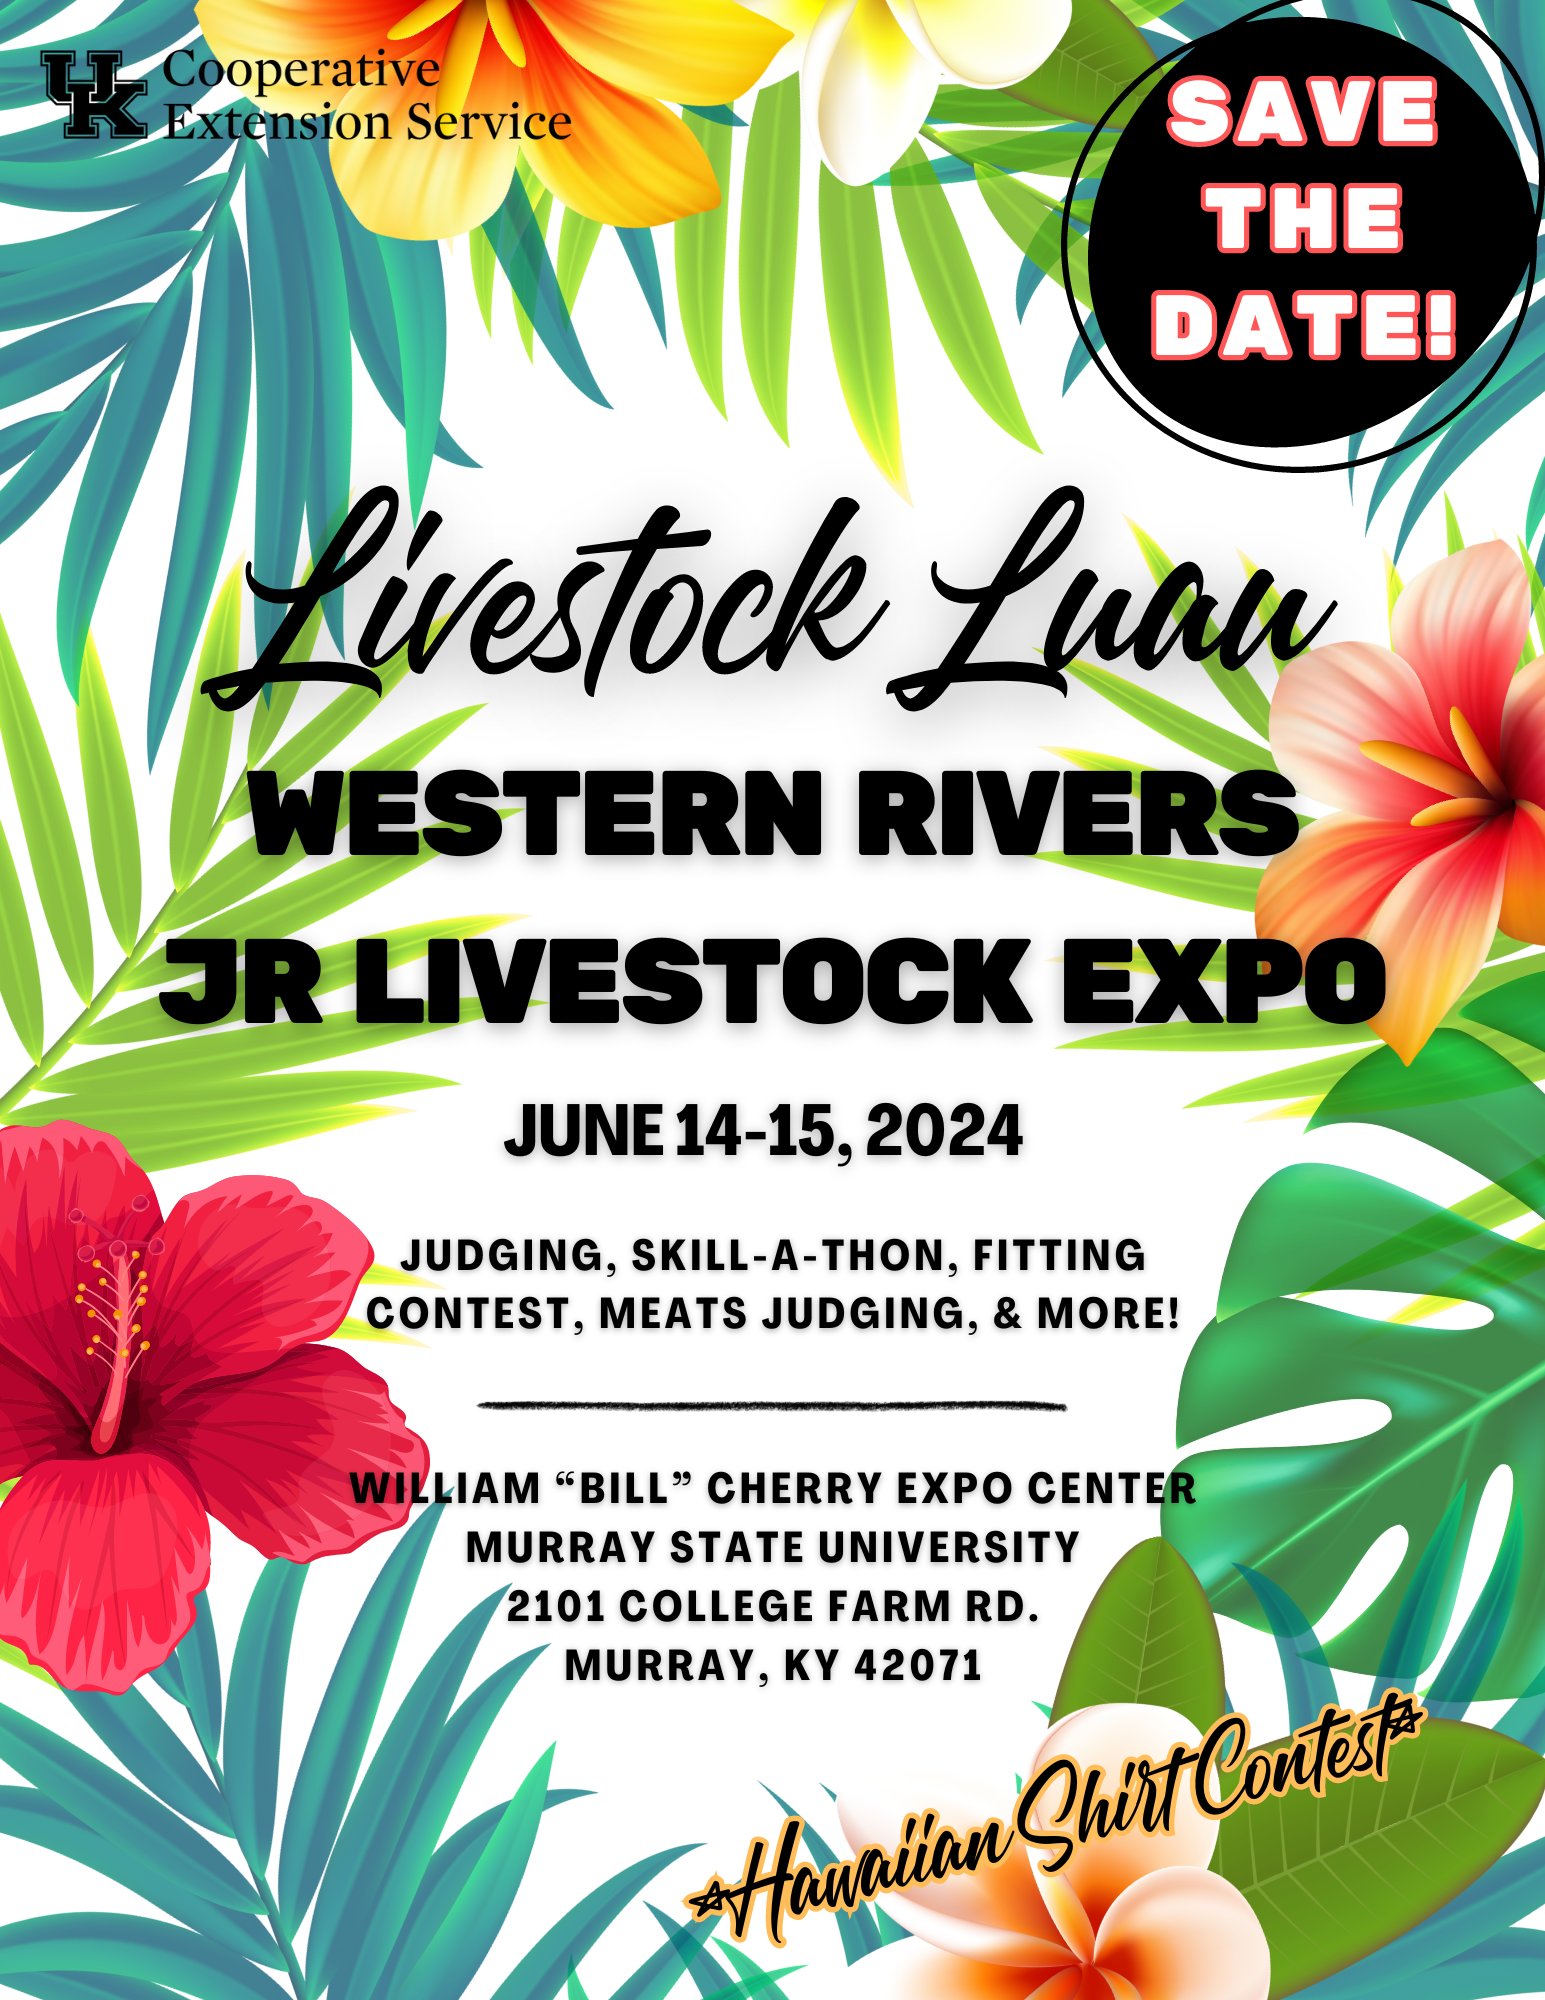 Livestock Luau Western Rivers JR Livestock Expo Flyer 2024